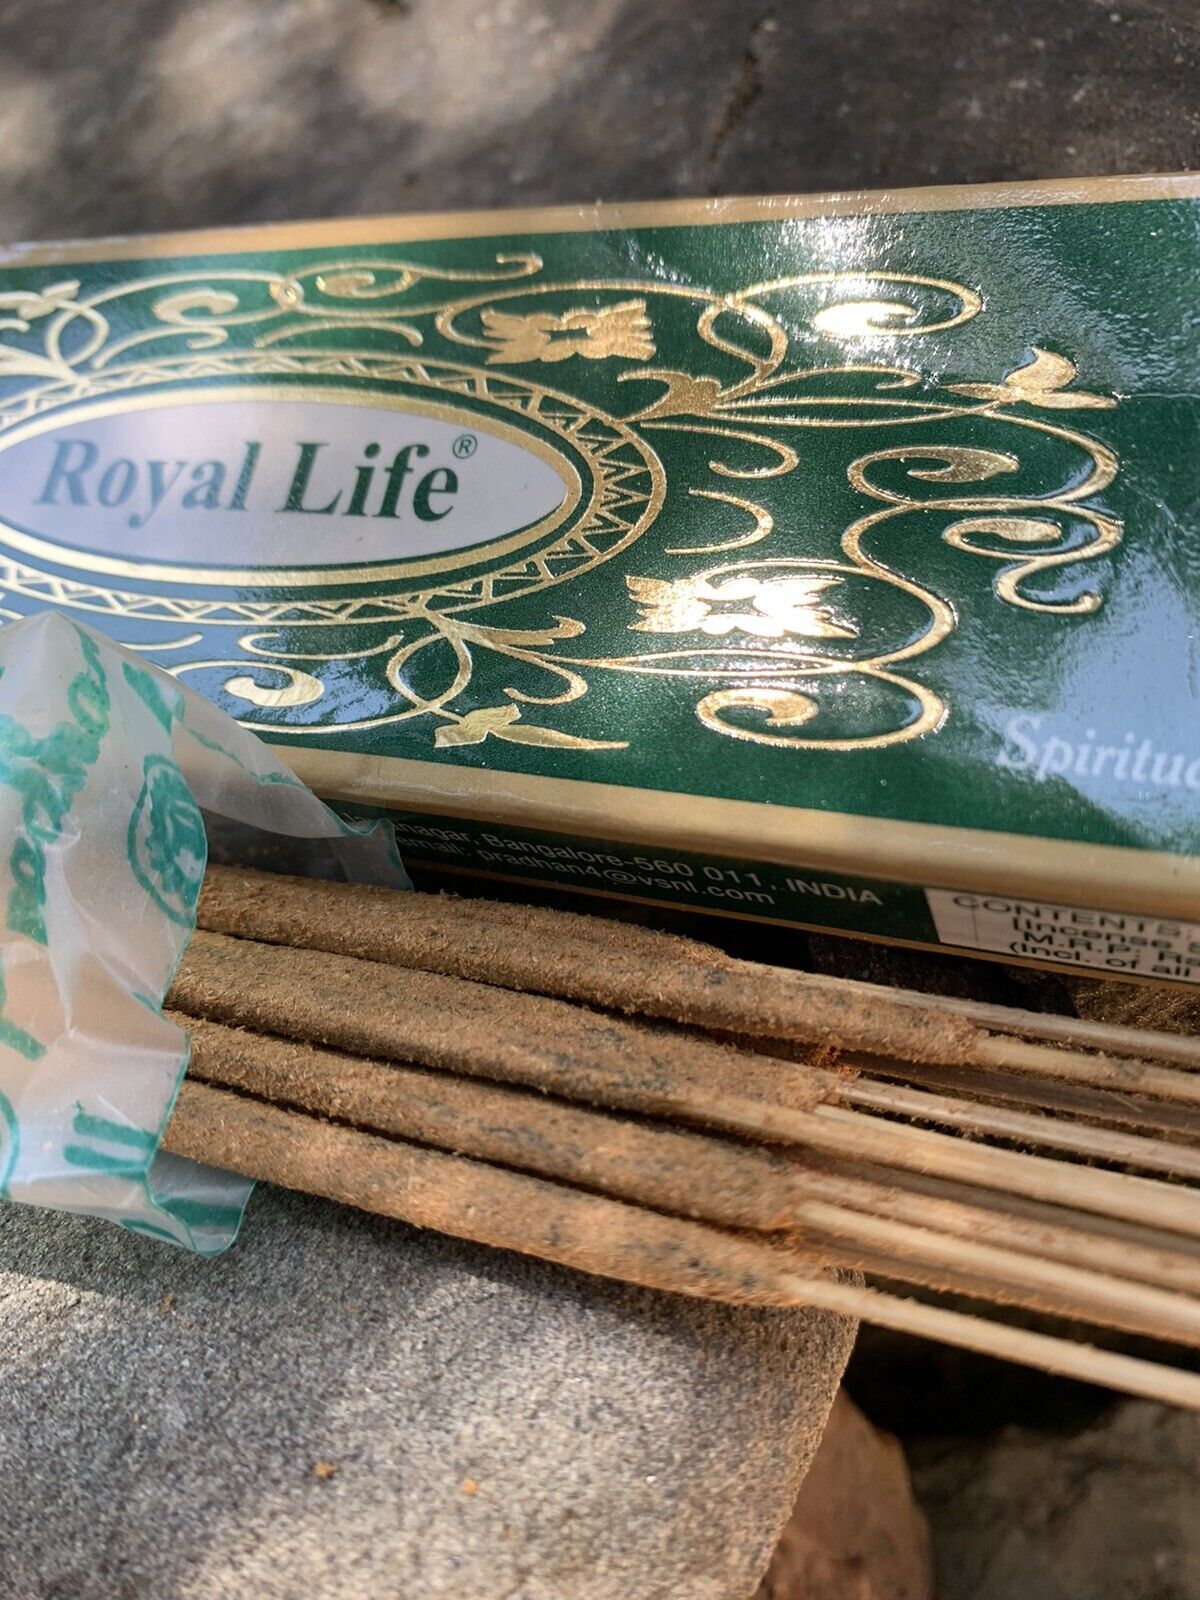 Rare Pradhan Royal Life Incense from India x5 packs